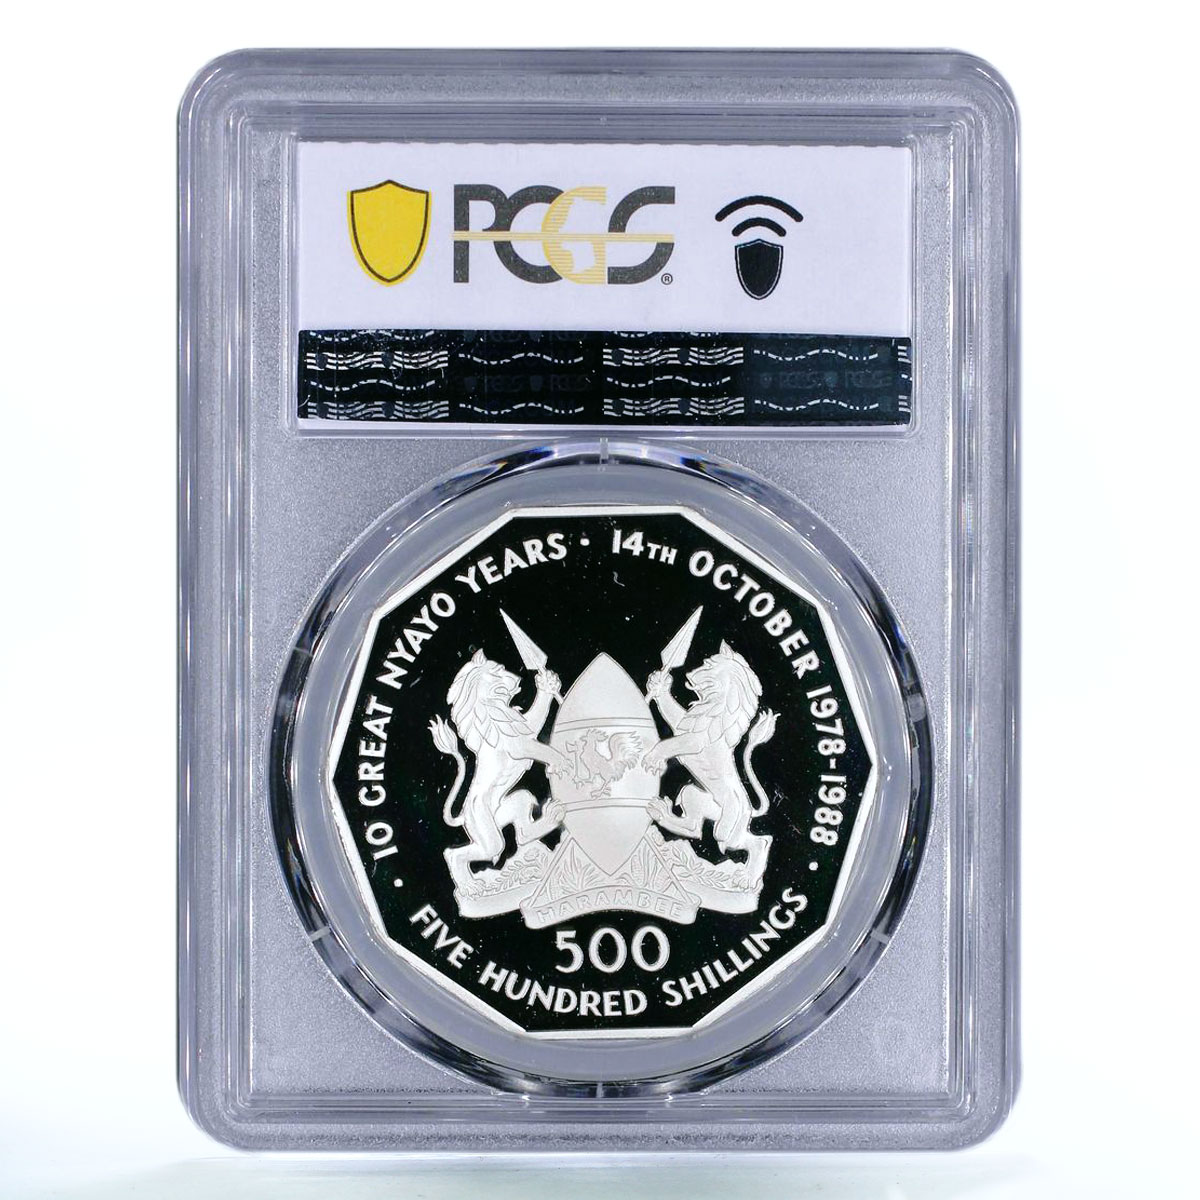 Kenya 500 shillings 10th Anniversary of President Moi PR69 PCGS silver coin 1988